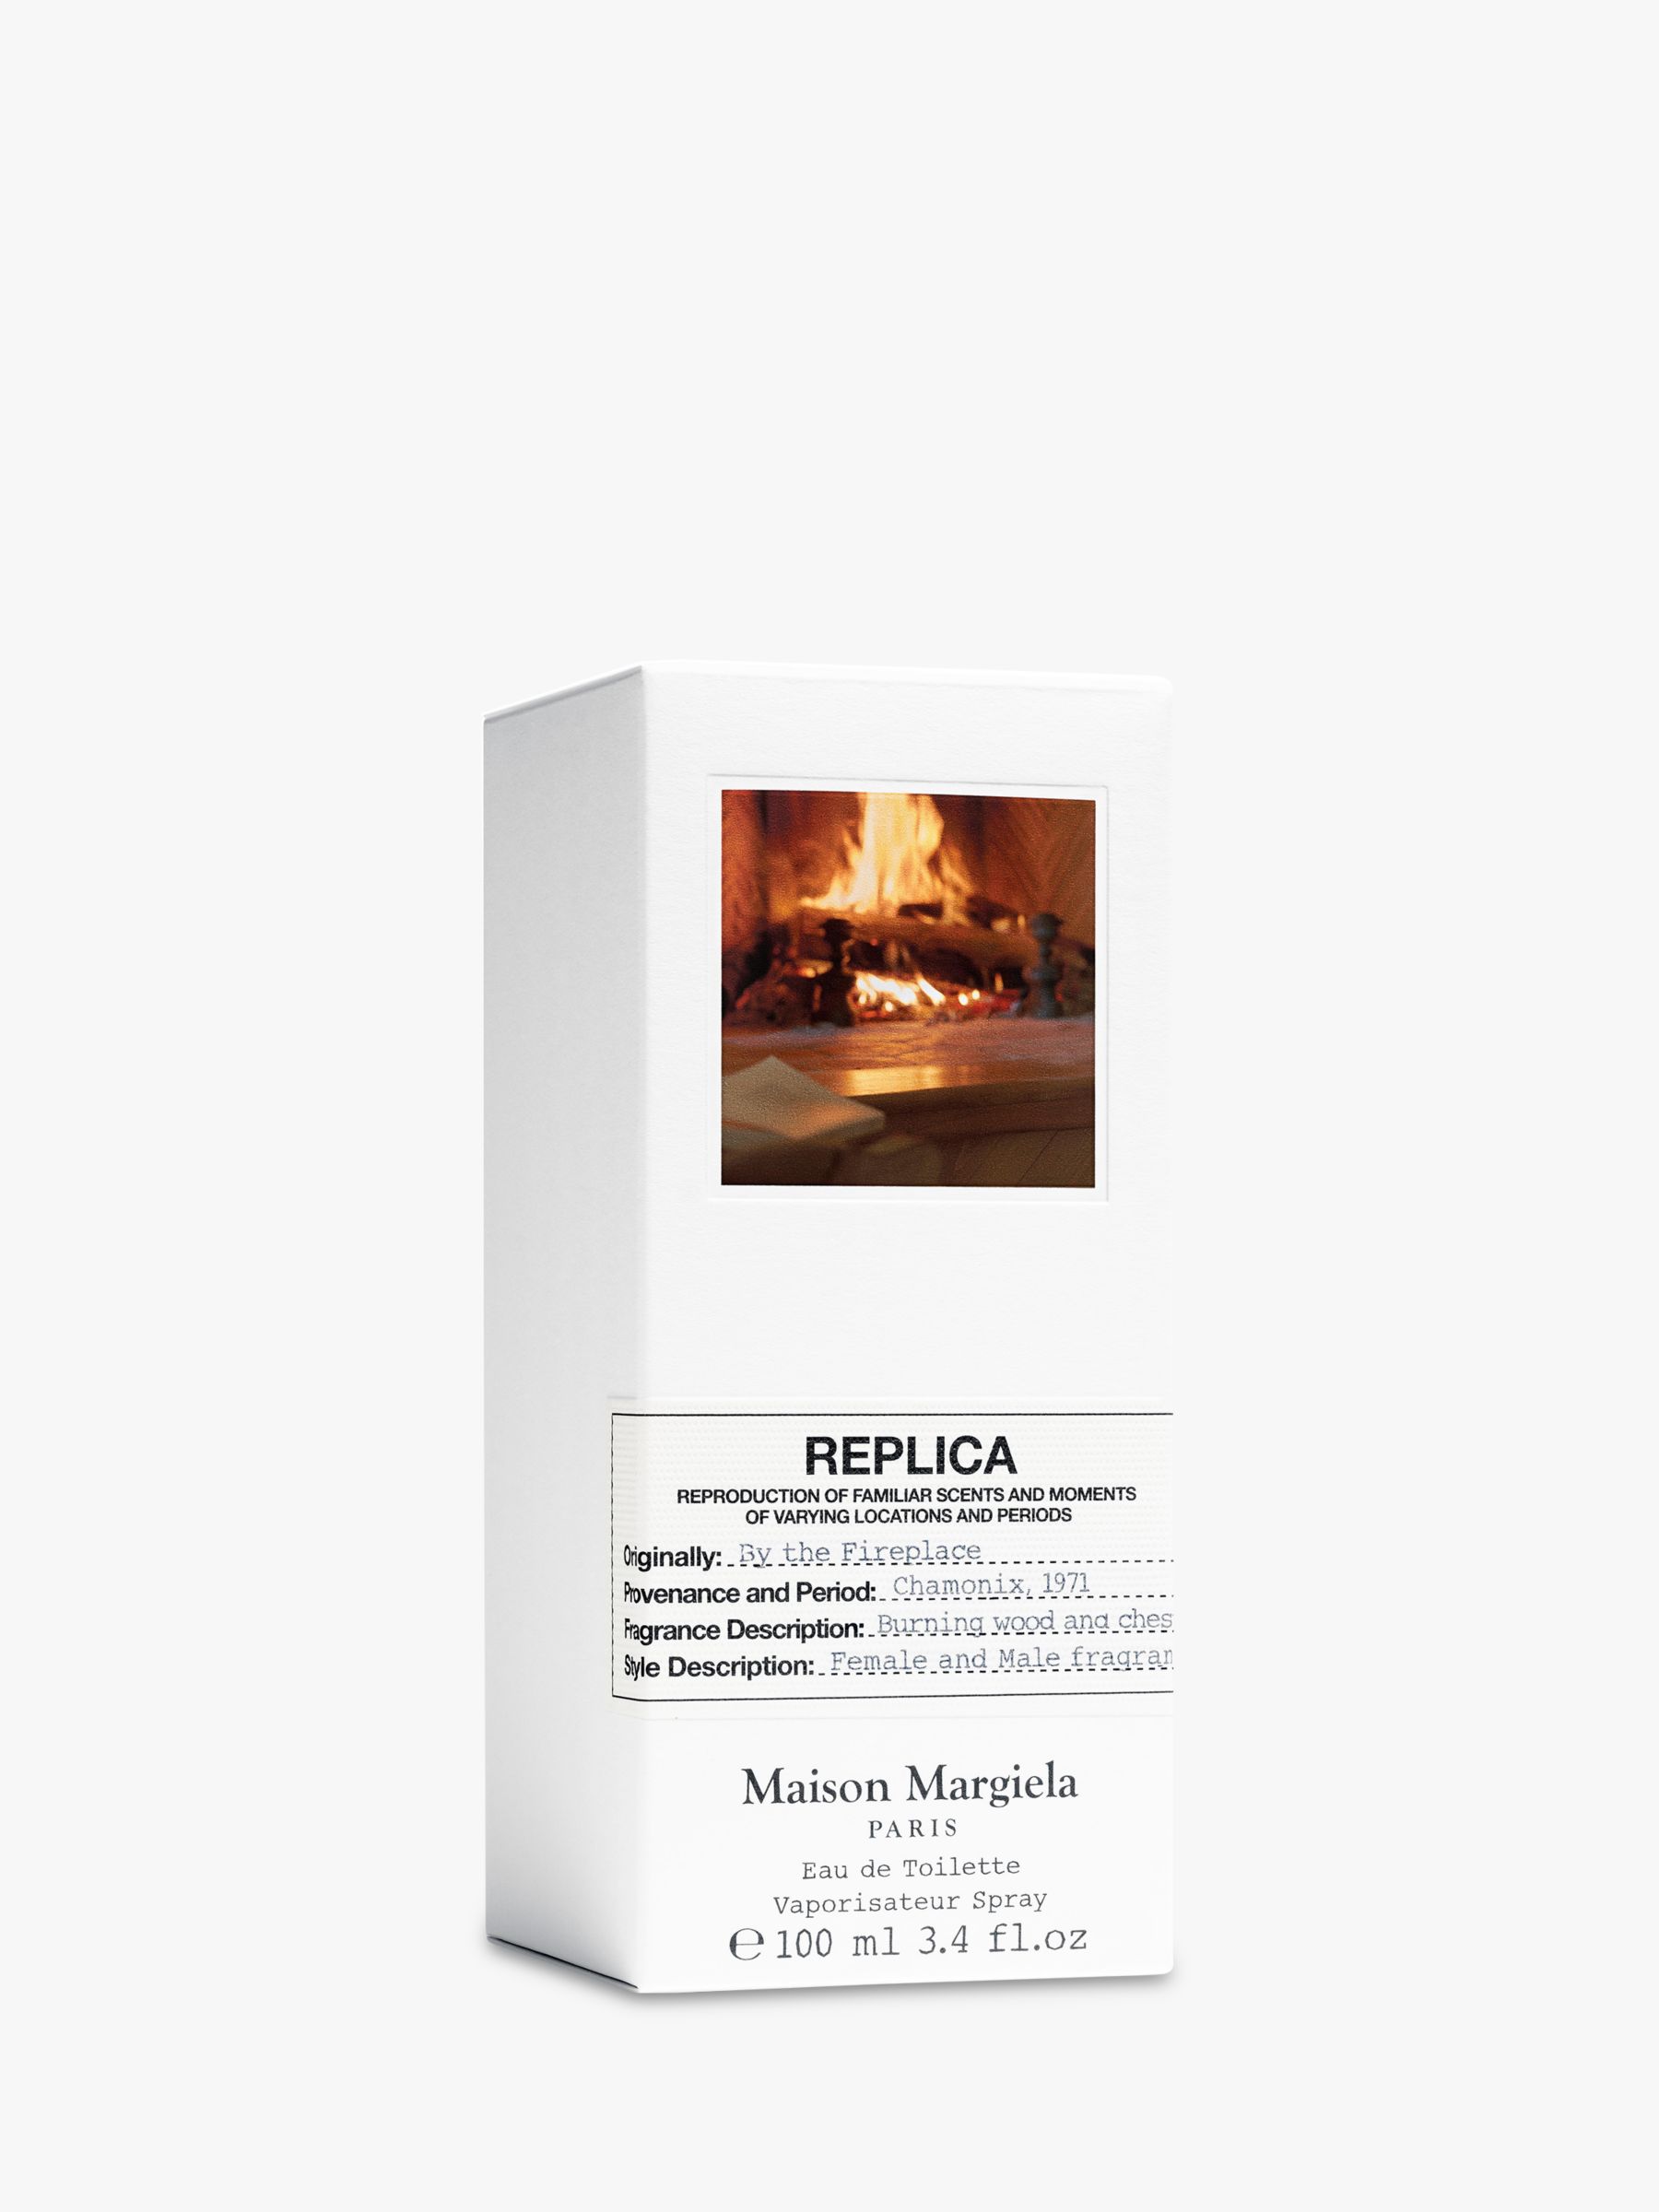 Maison Margiela Replica By The Fireplace Eau de Toilette, 100ml 2